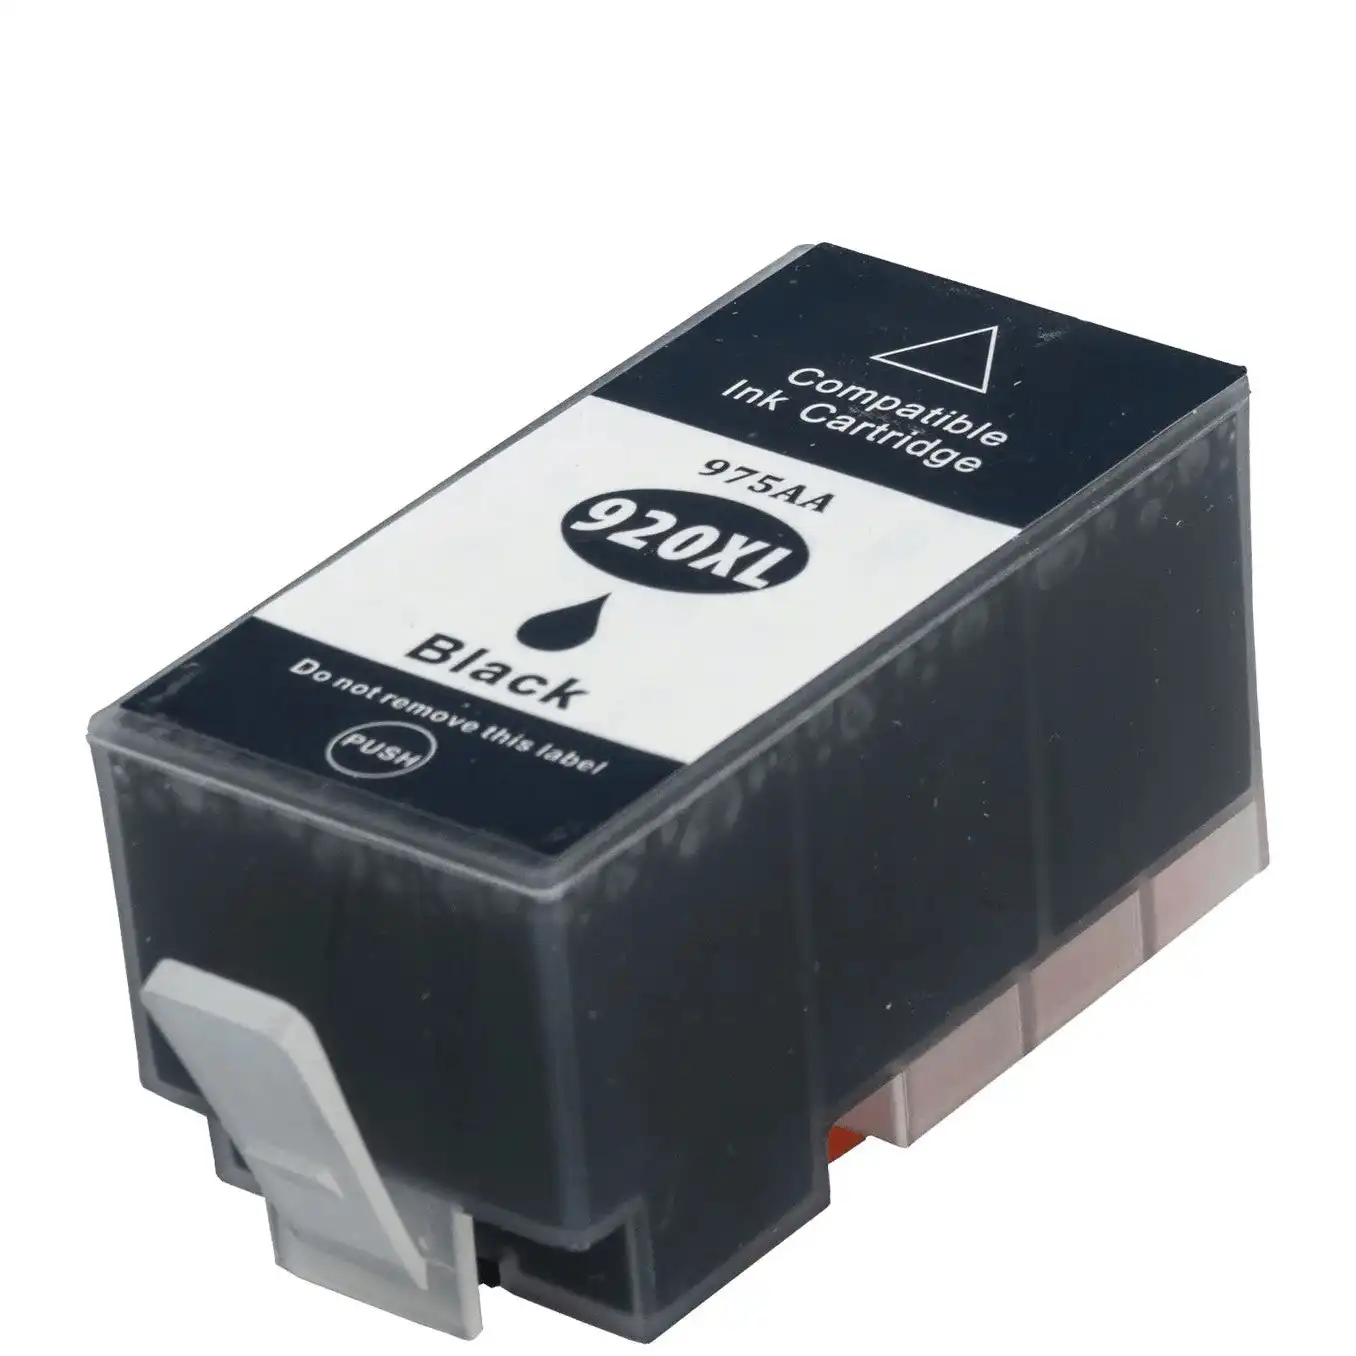 HP 920XL Compatible Black Inkjet Cartridge CD975AA